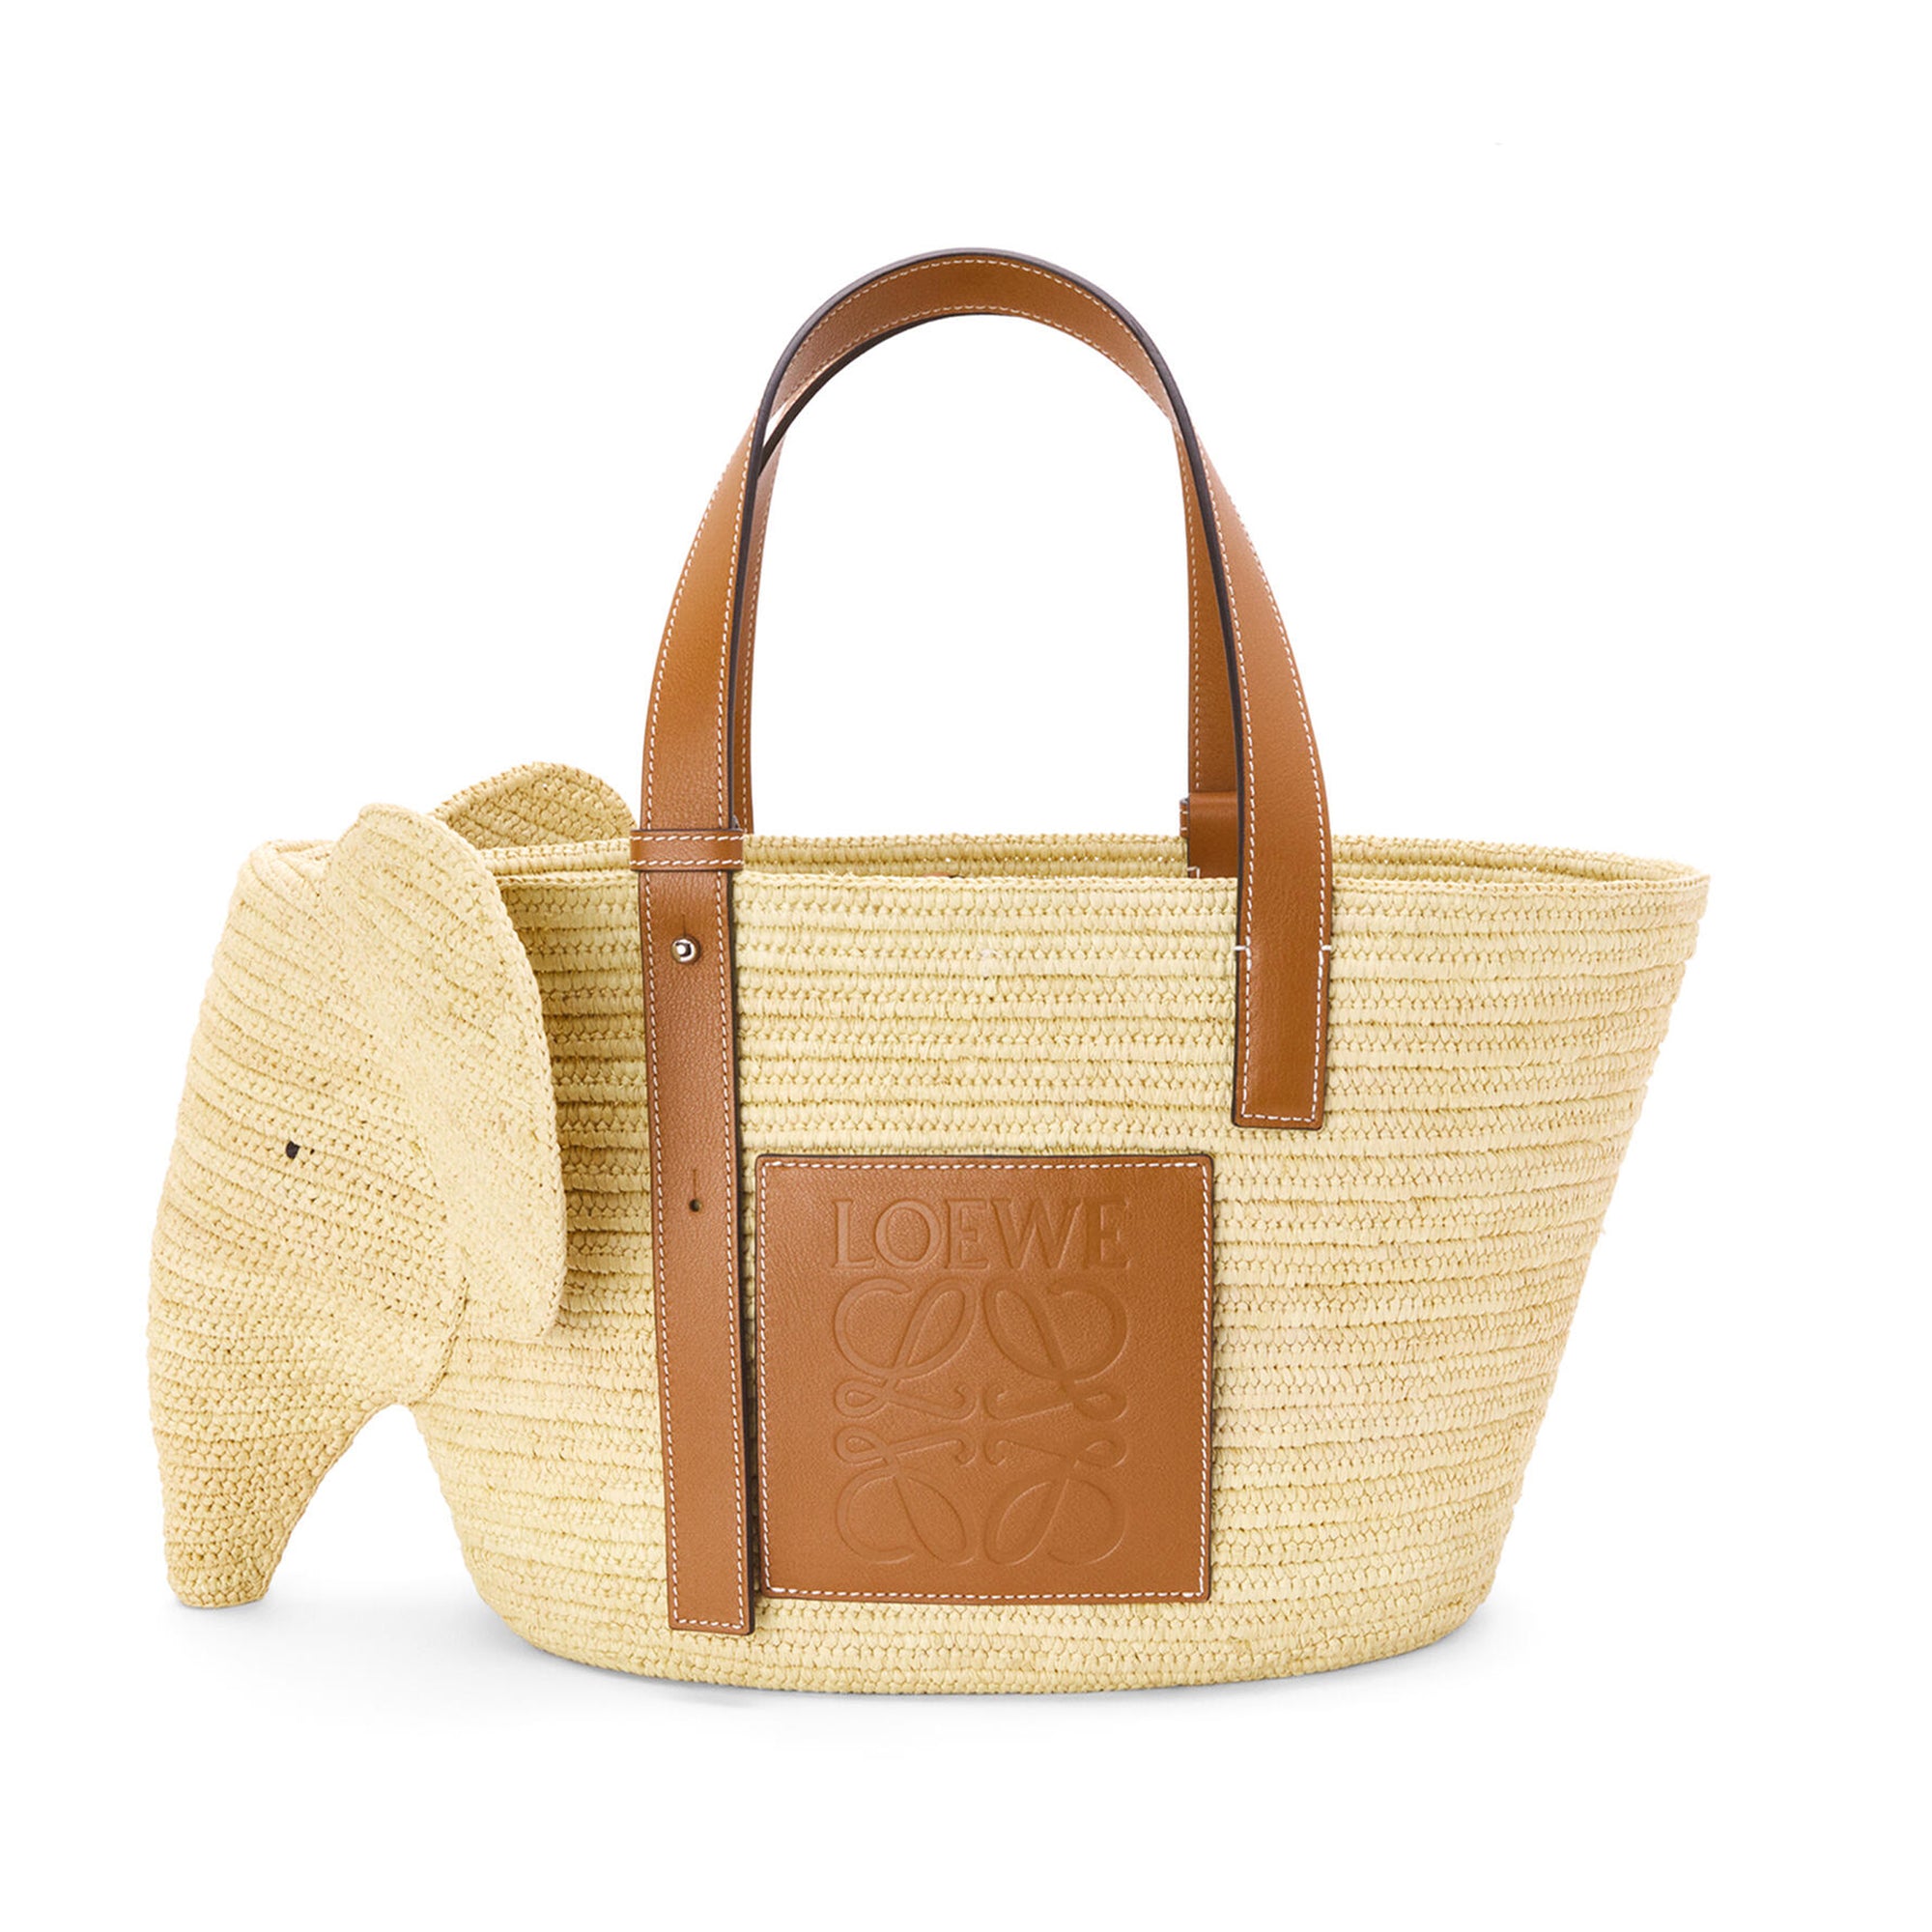 Loewe - Women’s Elephant Basket Bag - (Natural/Tan) view 1